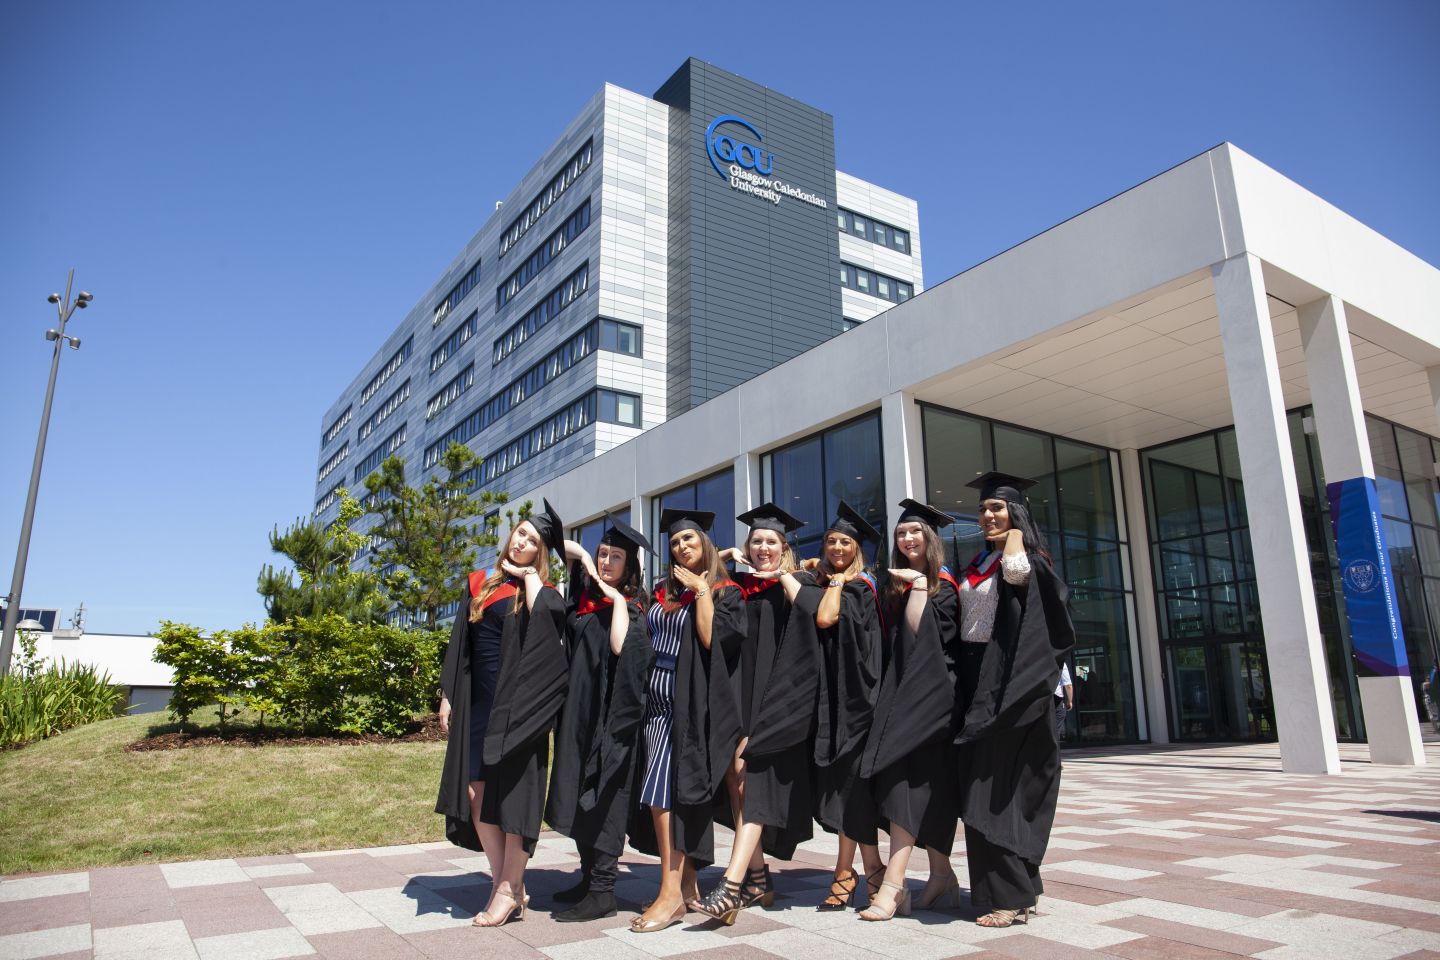 Students pose on graduation day at Glasgow Caledonian University.